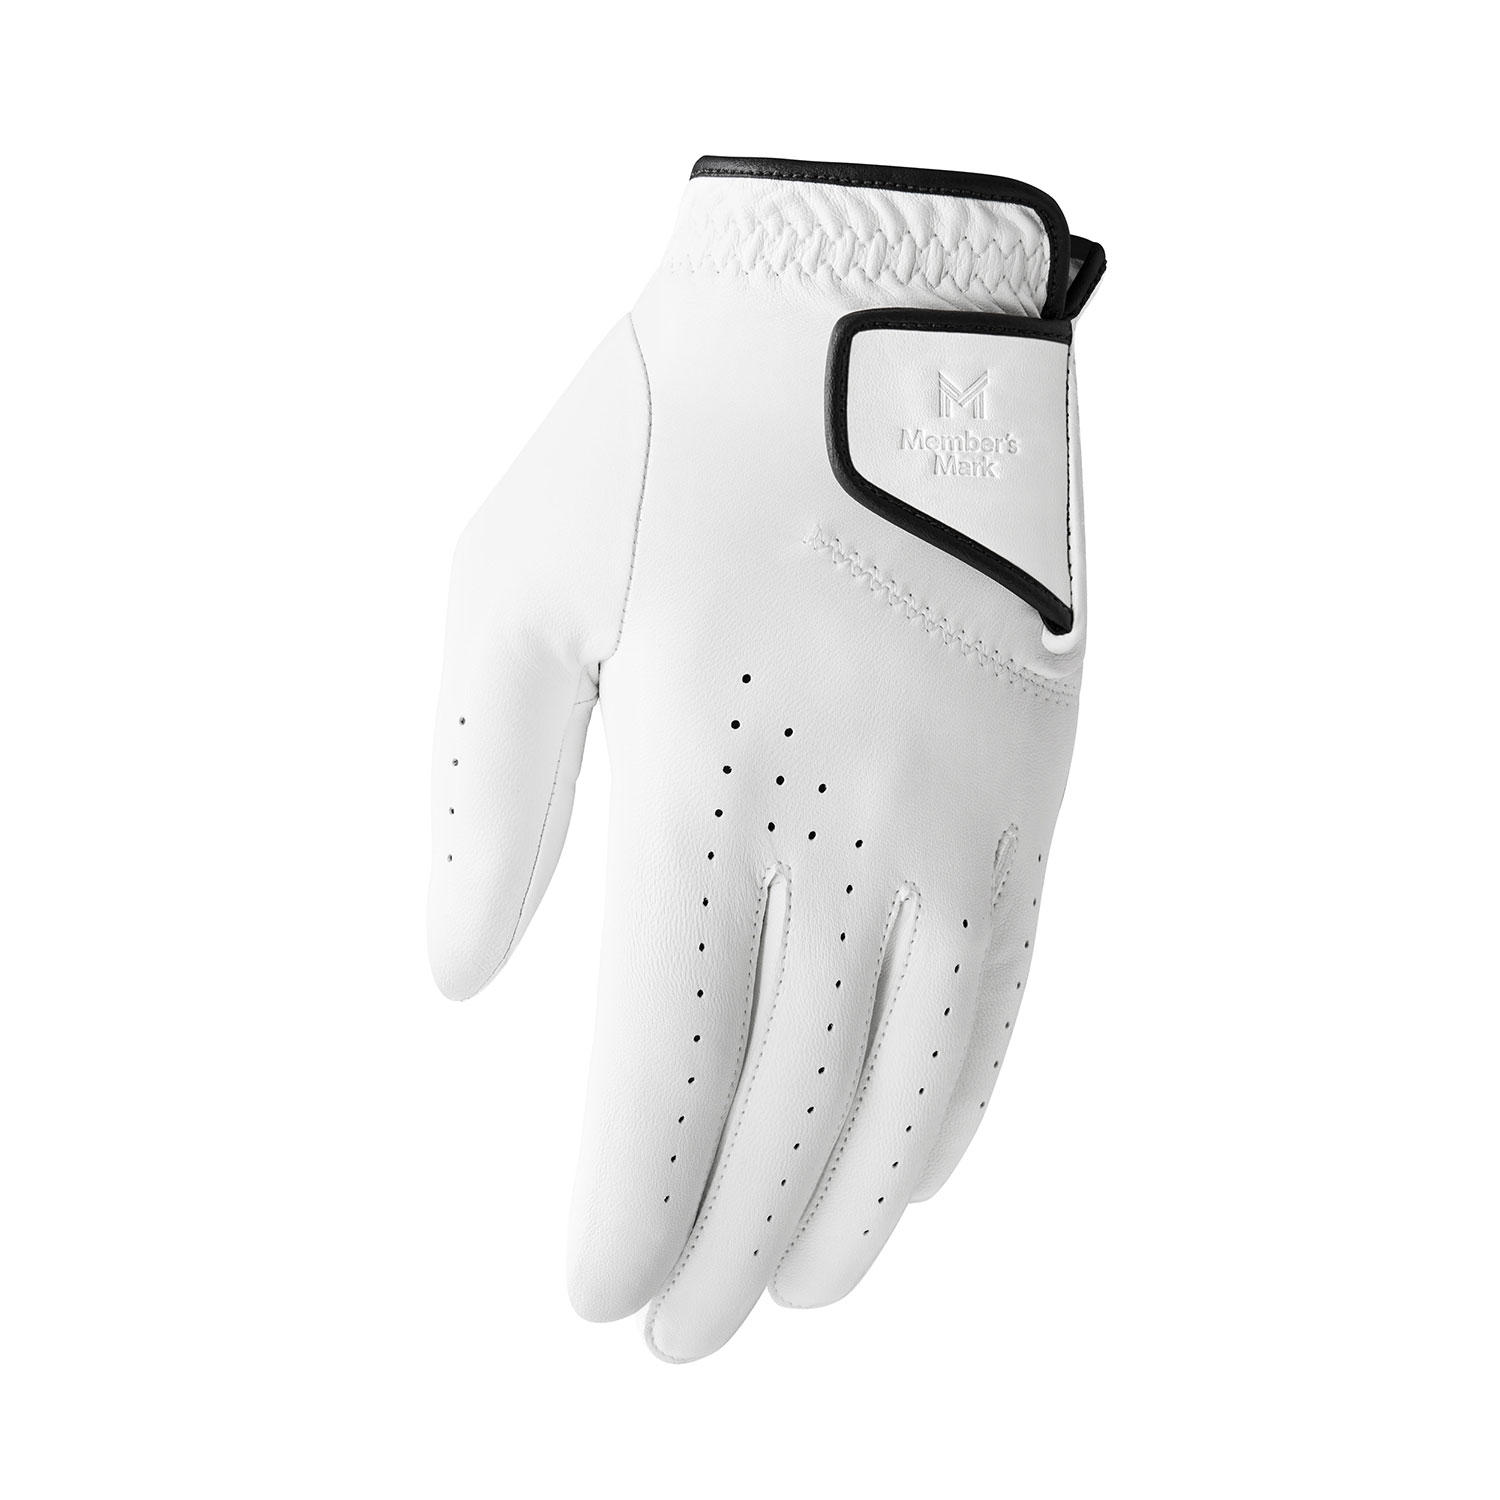 Member's Mark Elite Premium Golf Glove- S